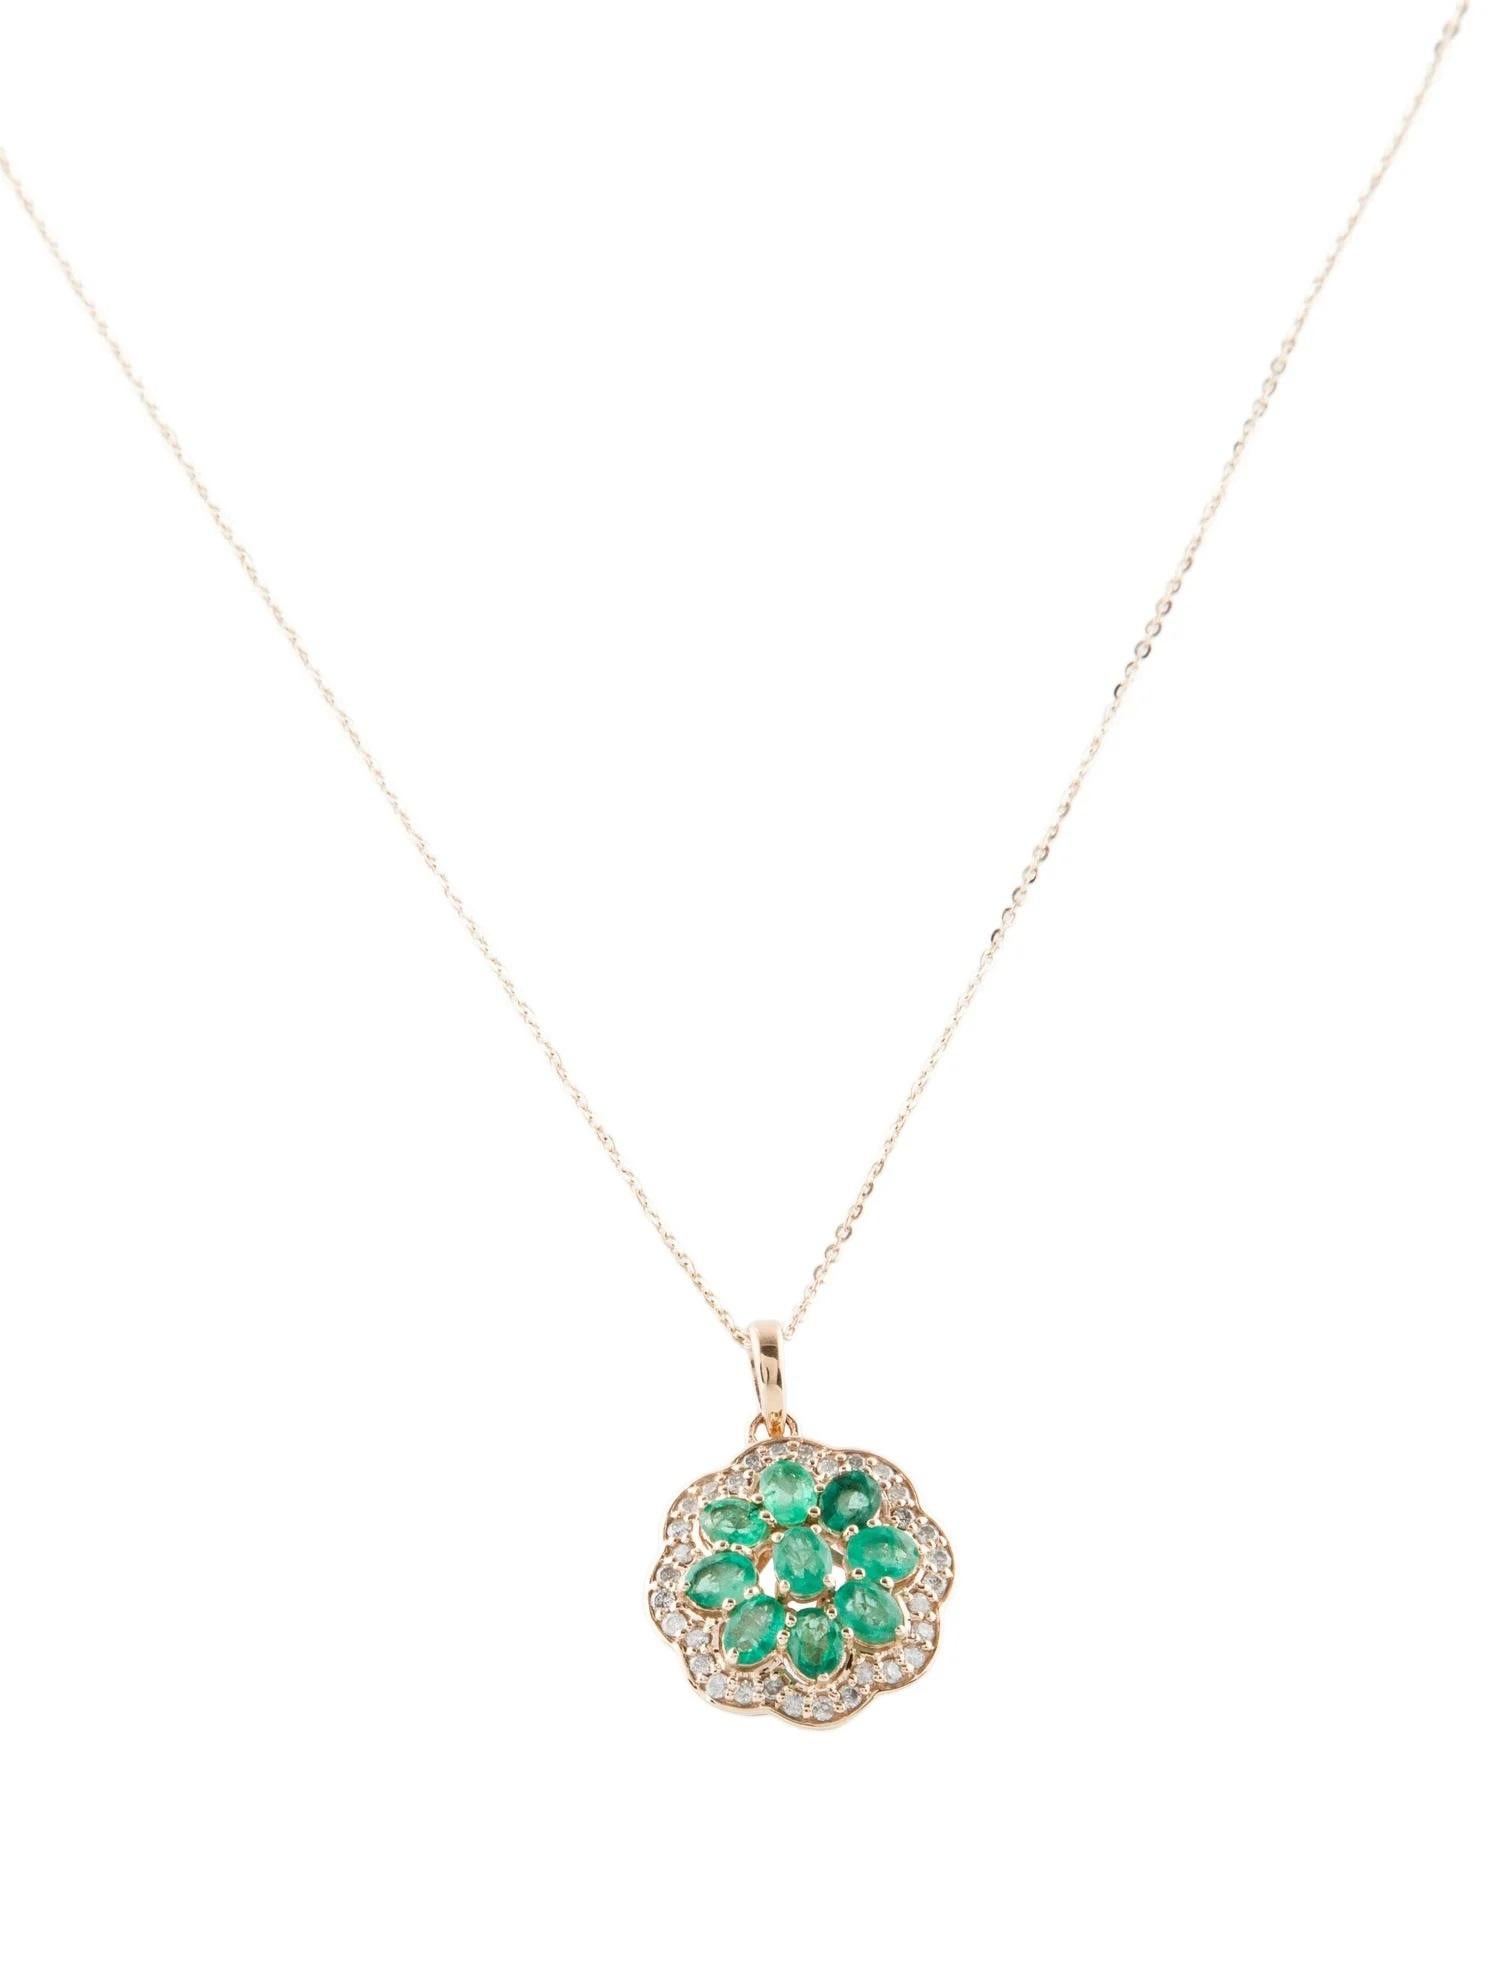 Emerald Cut 14K Emerald & Diamond Pendant Necklace  Faceted Oval Emerald  Near Colorless D For Sale